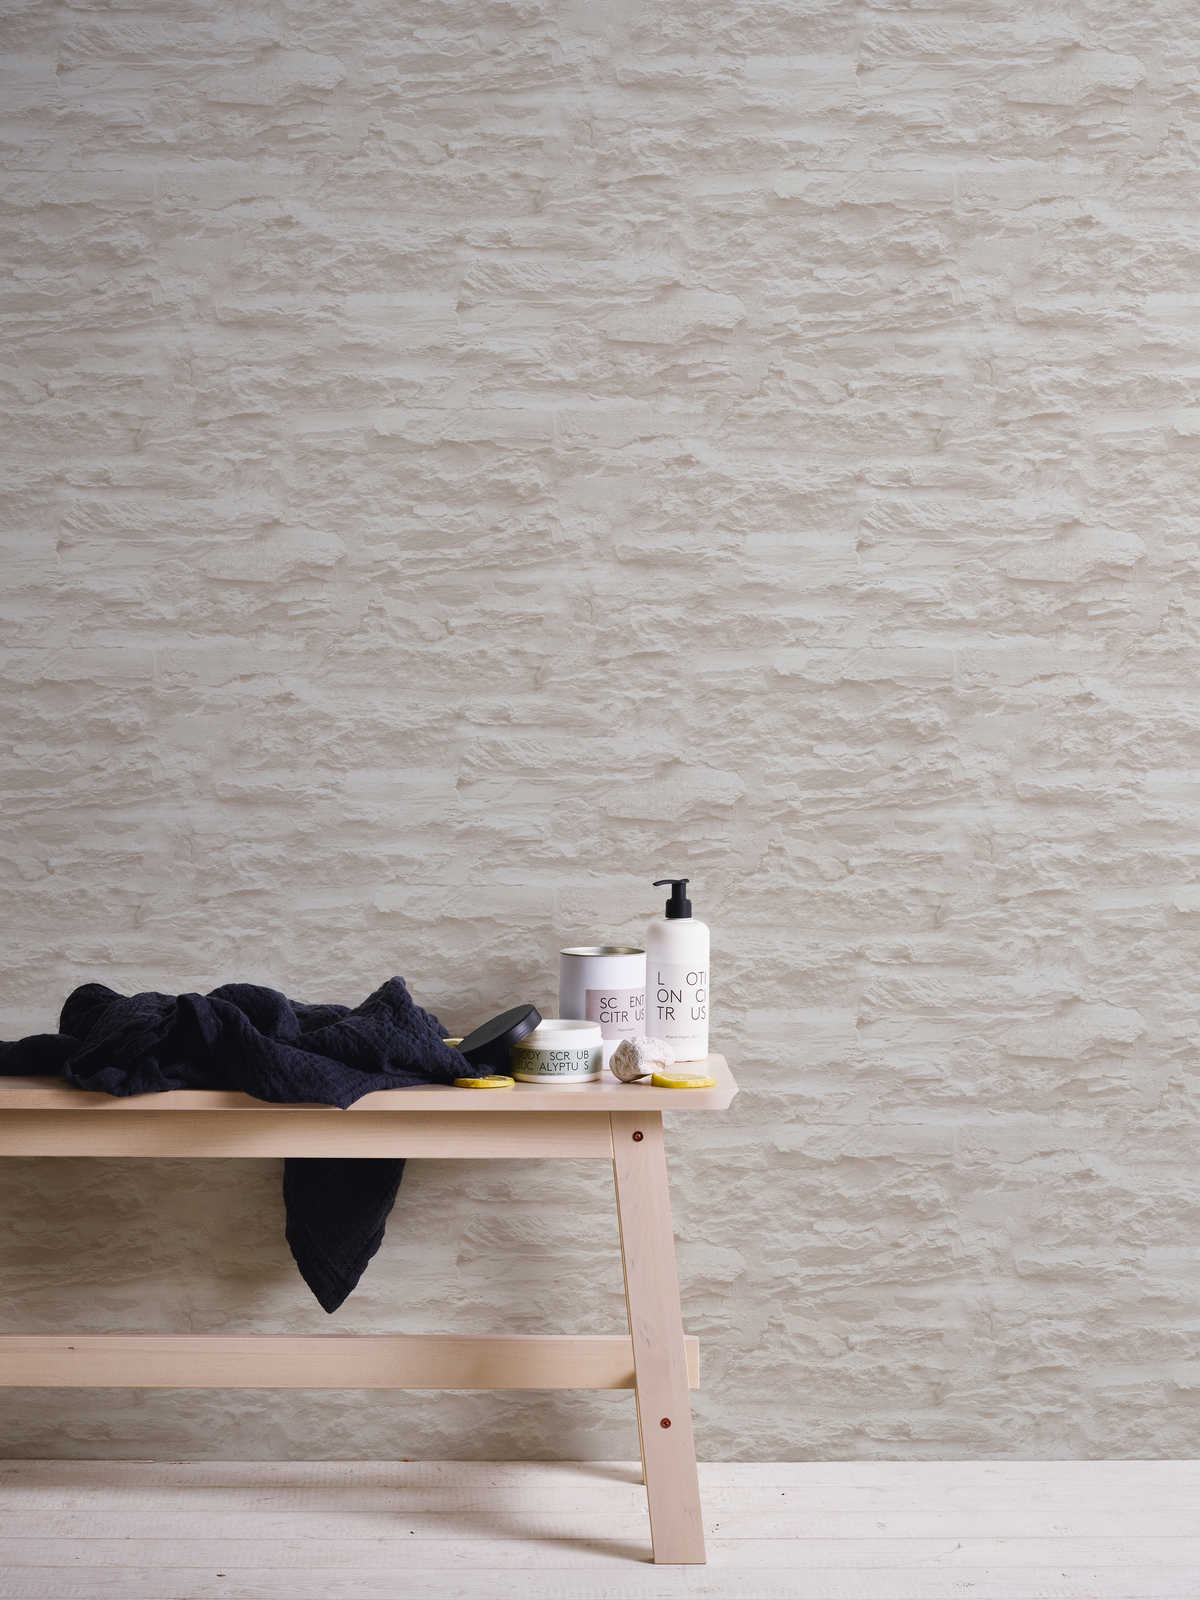             Self-adhesive wallpaper | wall optics with natural stone & plaster - cream, white
        